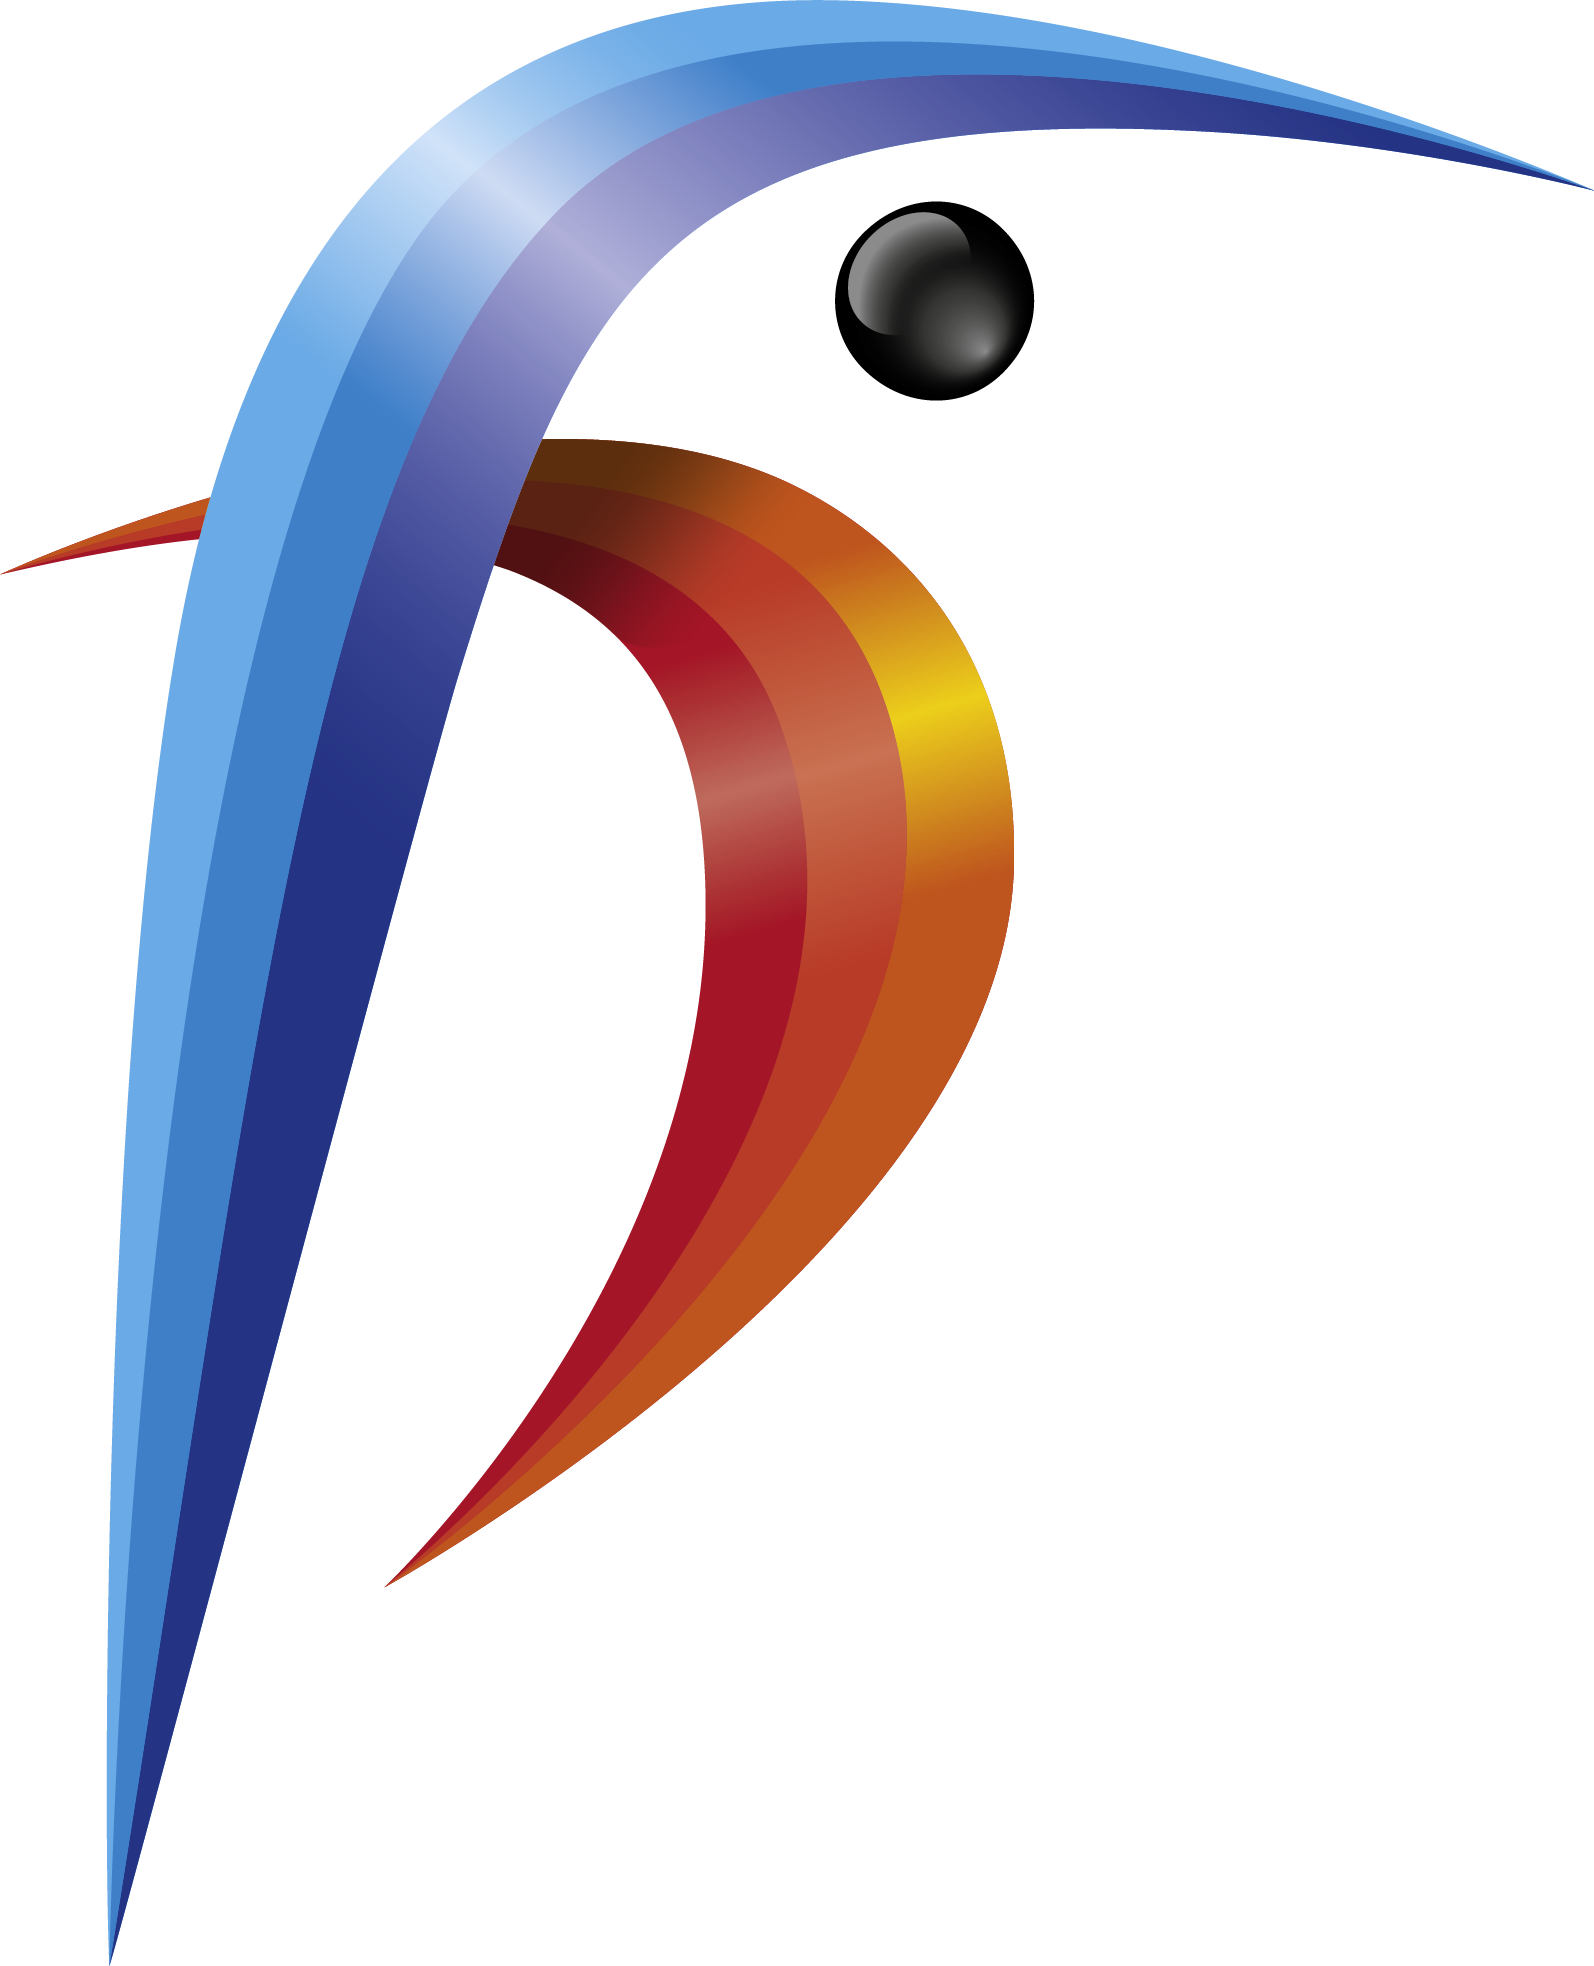 Kingfisher logo (PNG transparent)